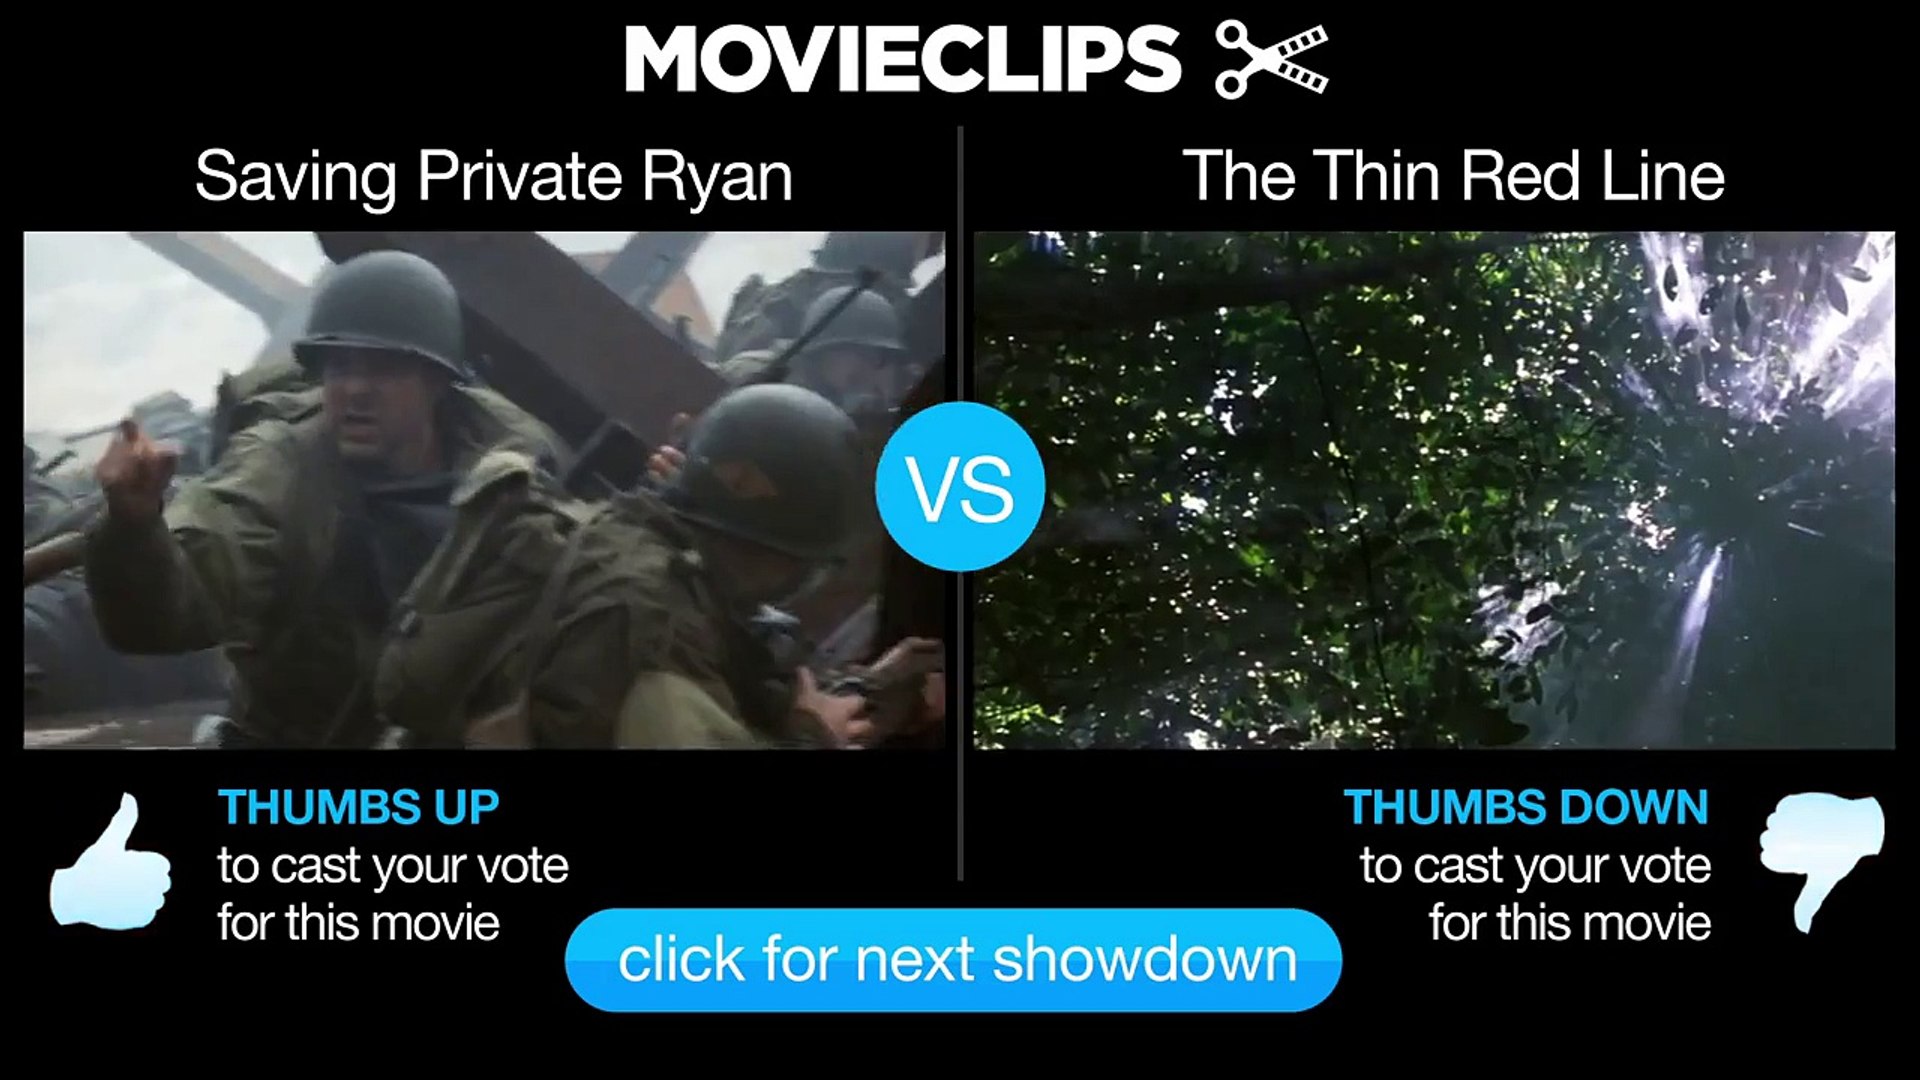 Saving Private Ryan vs The thin Red Line